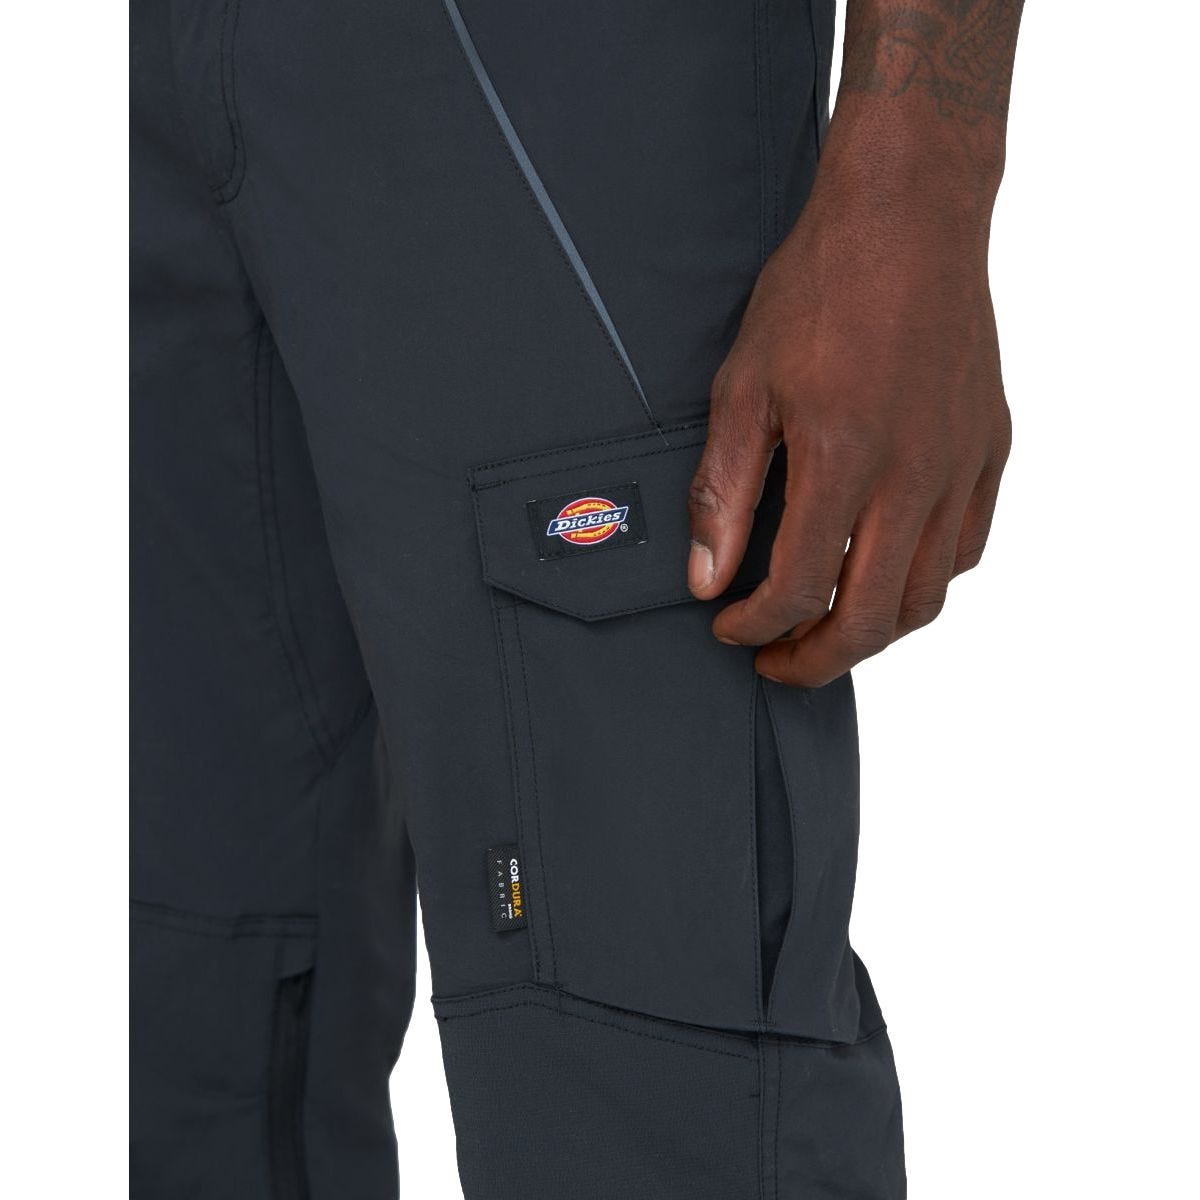 Pantalon léger Flex Noir - Dickies - Taille 52 4